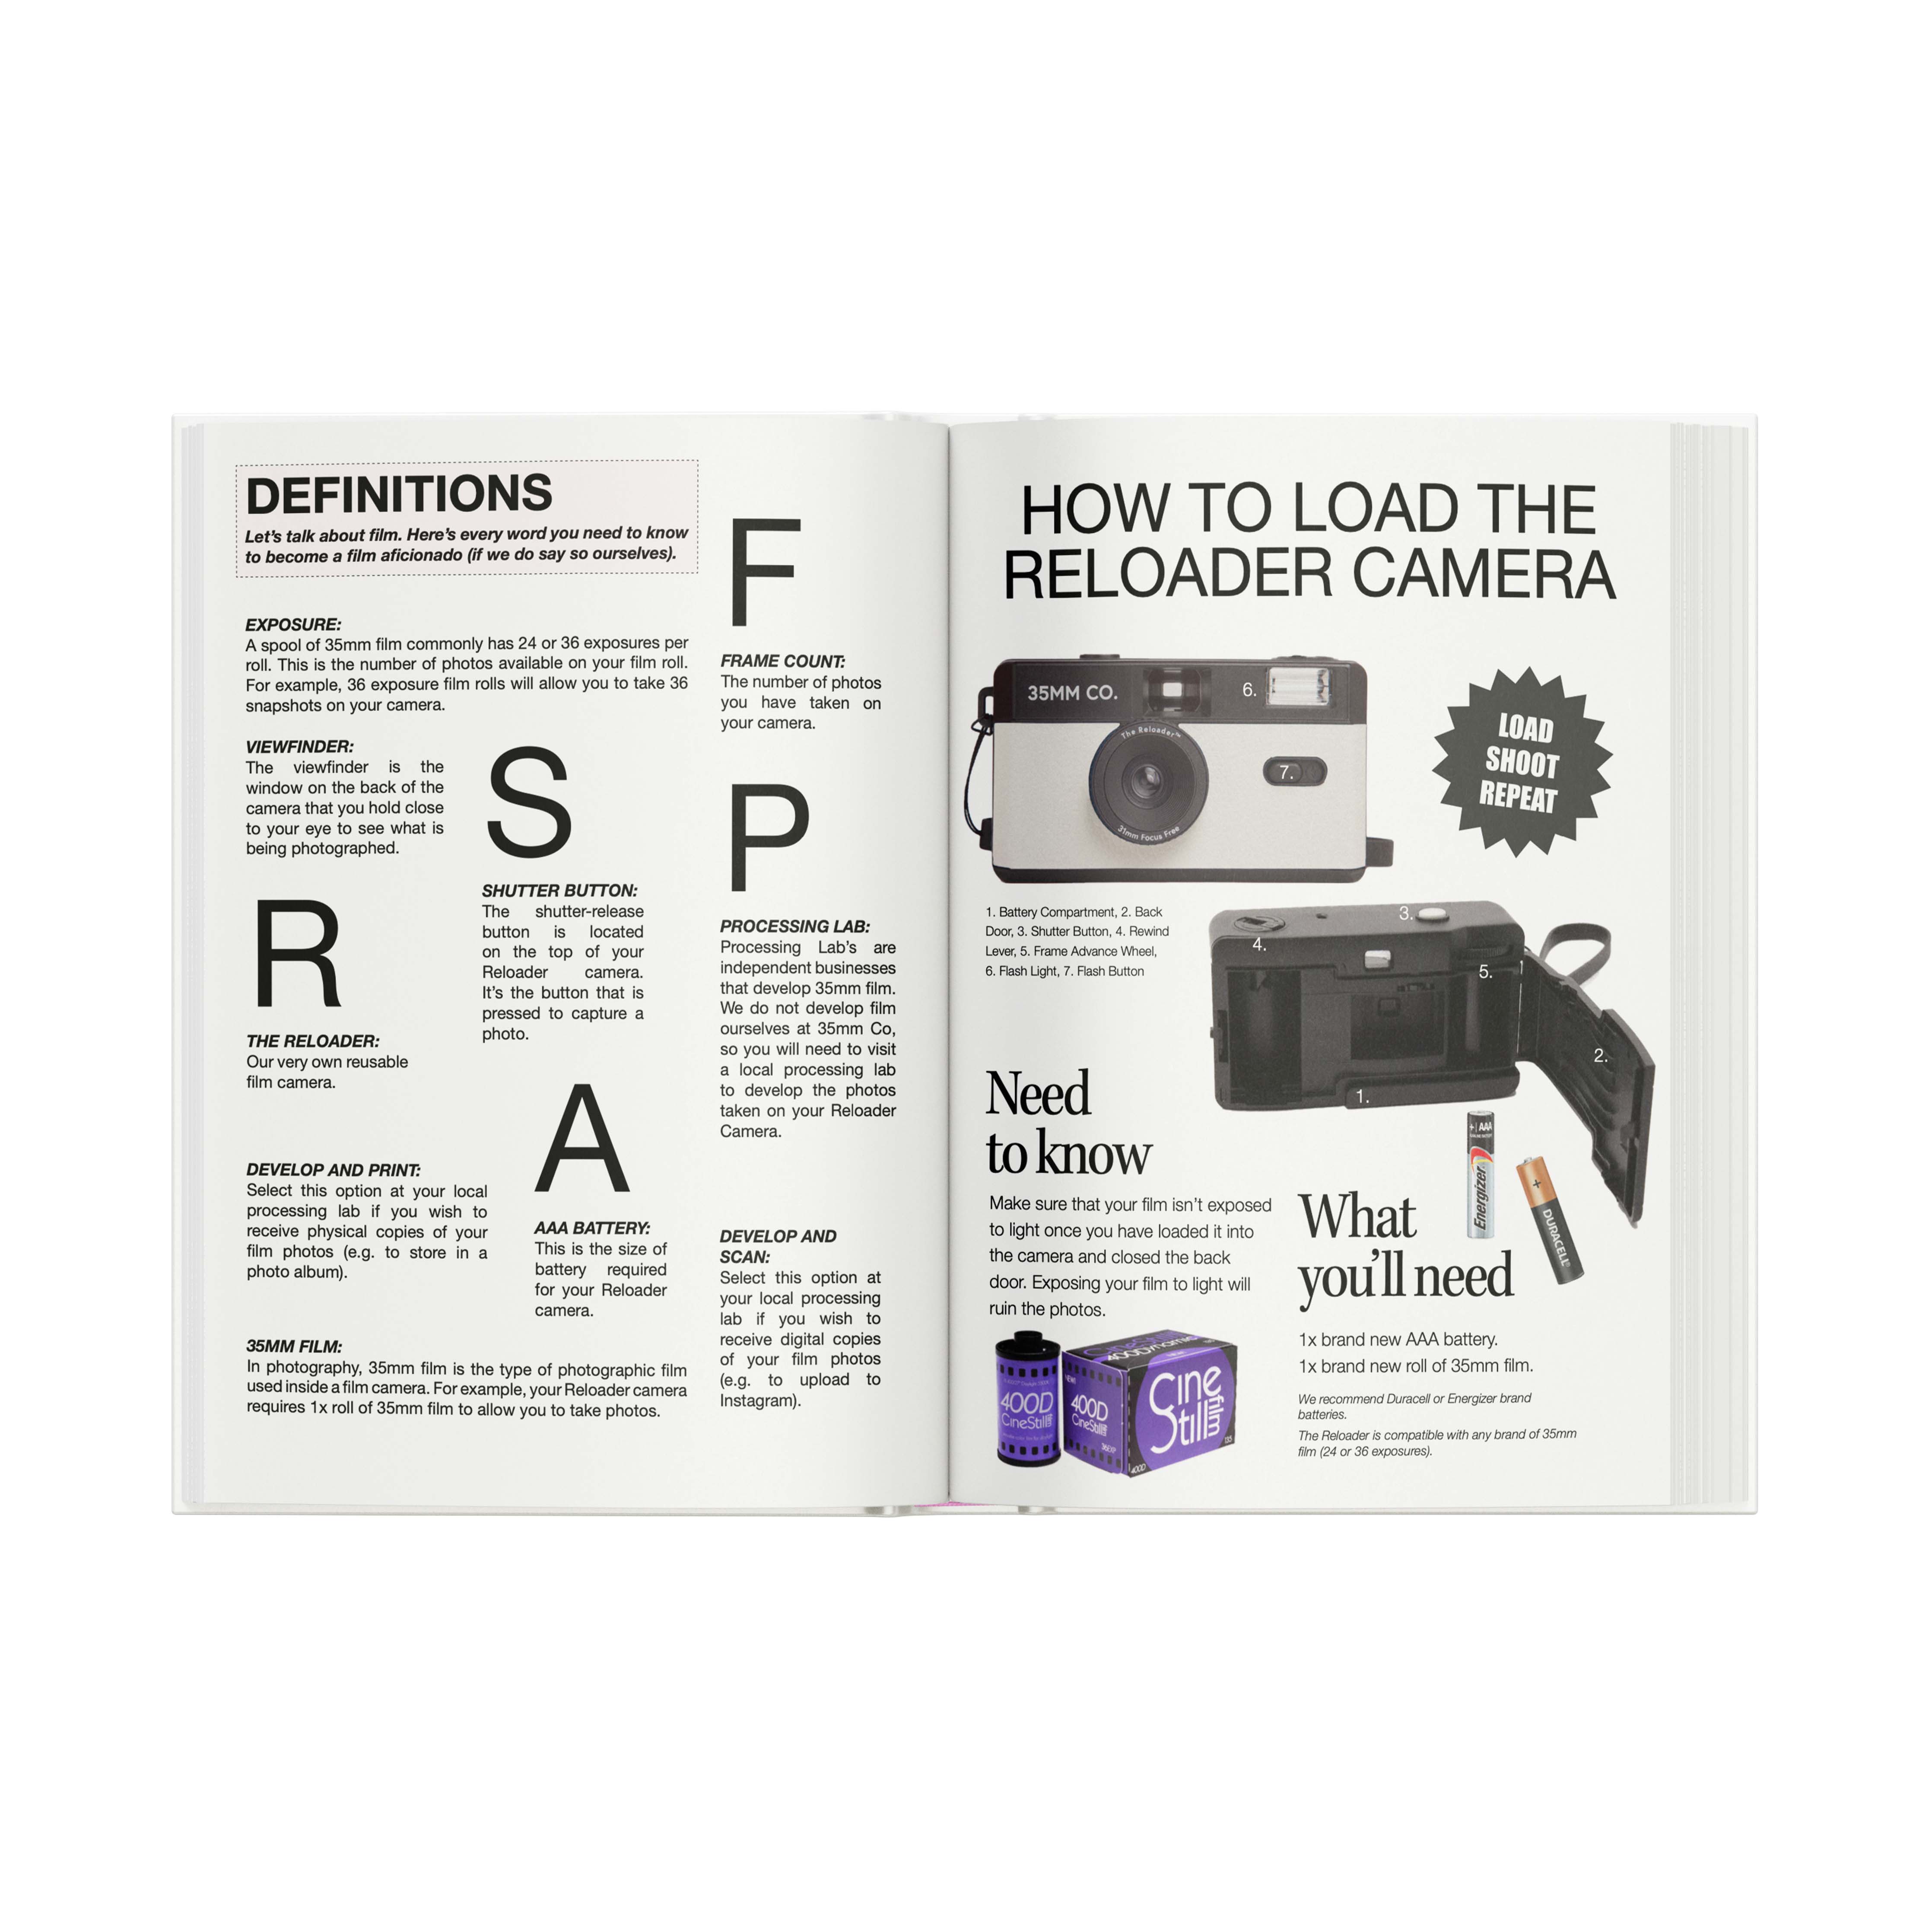 The 35mm Film Photography Manual: Beginner's Guide E-book - Nibera